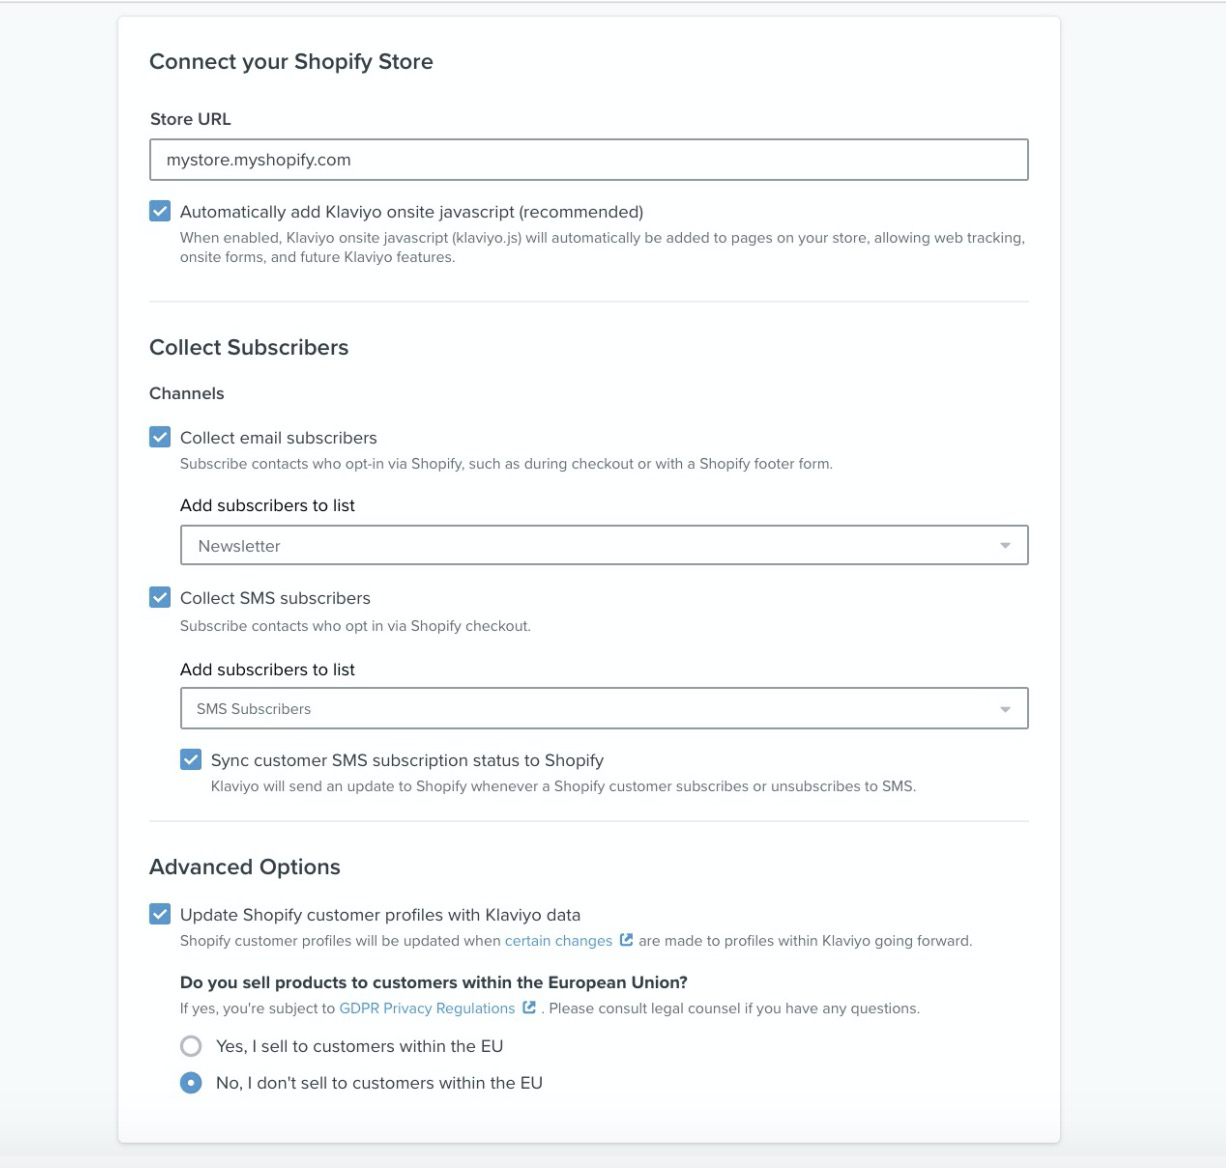 Shopify integration settings page in Klaviyo showing Update Shopify customer profiles with Klaviyo data checked